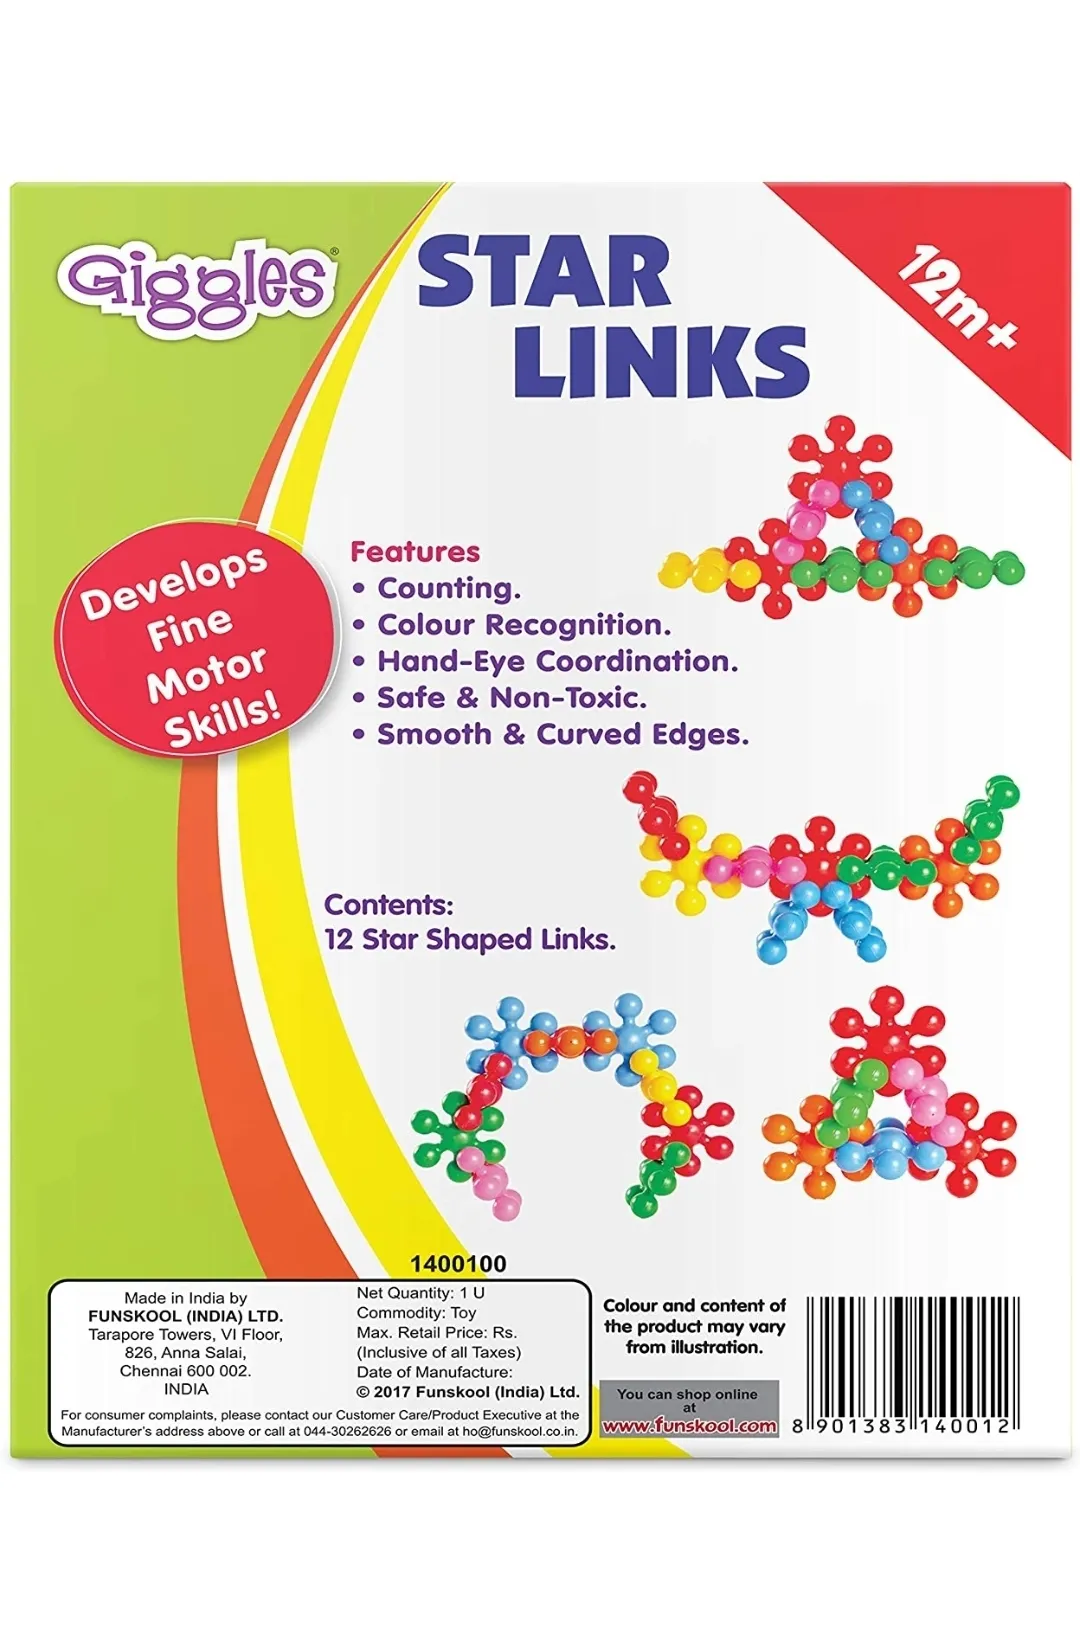 New Funskool Kiddy Star Link (Pack of 1 set)